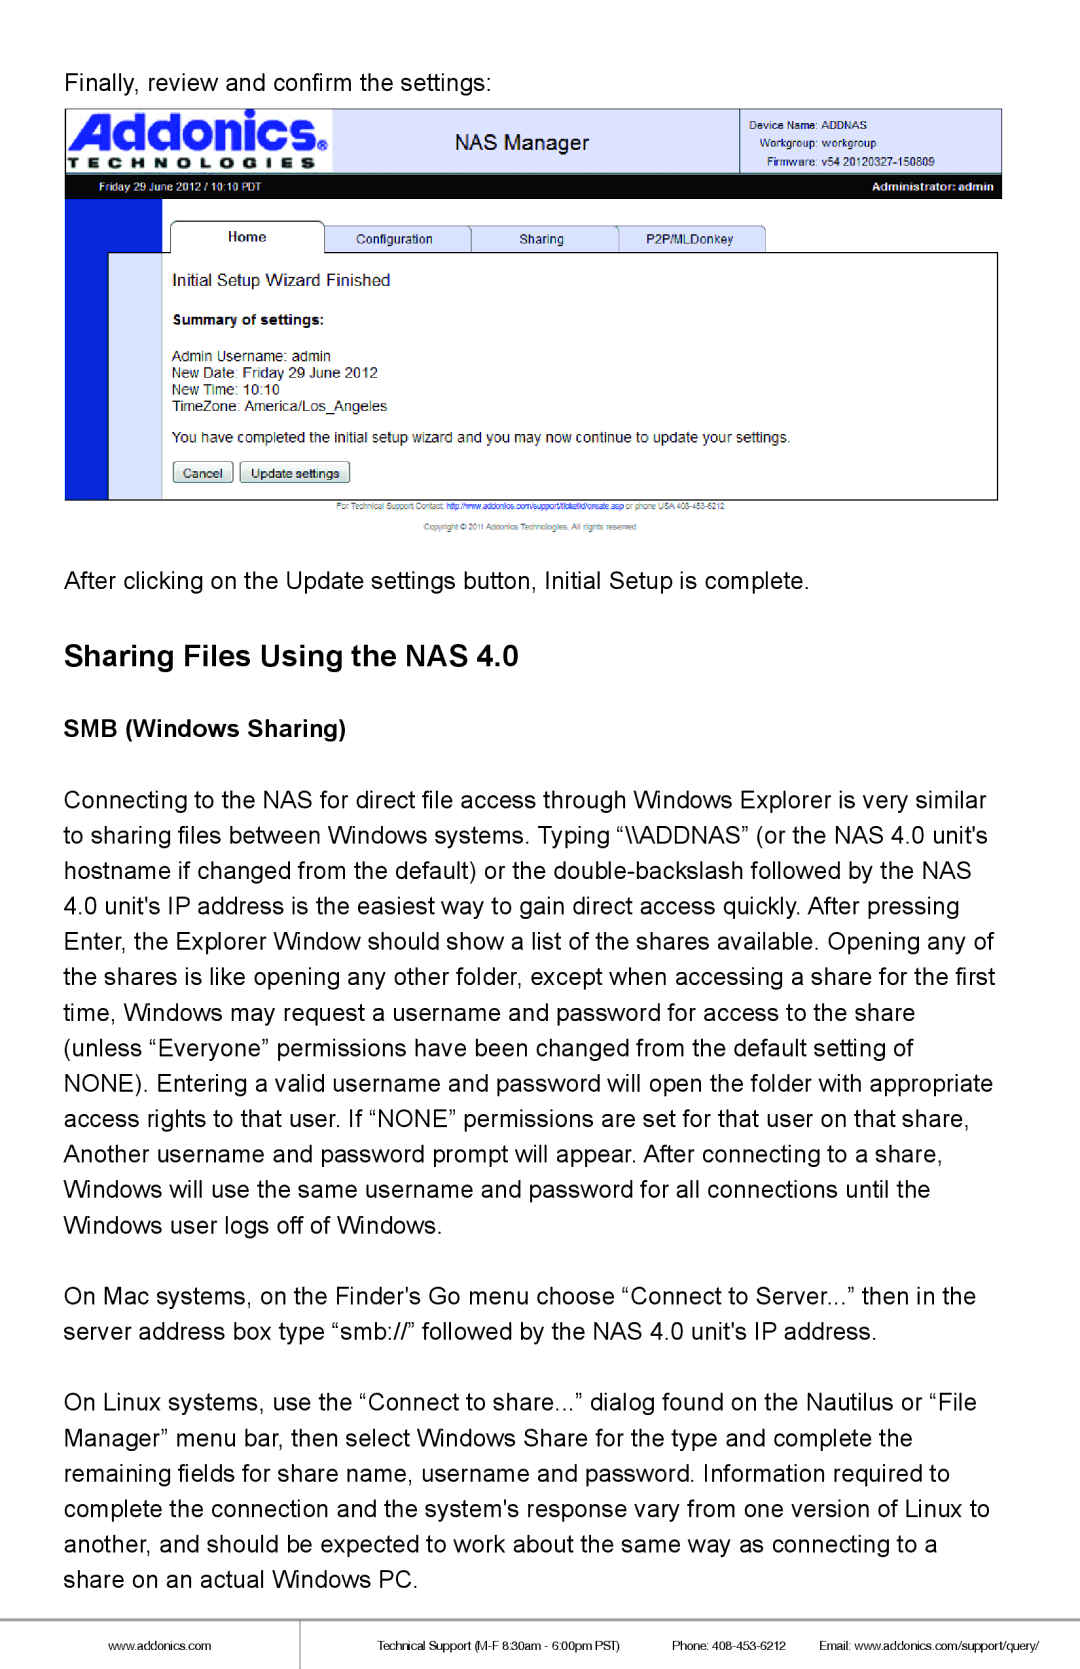 Addonics Technologies NAS40ESU manual Sharing Files Using the NAS, SMB Windows Sharing 